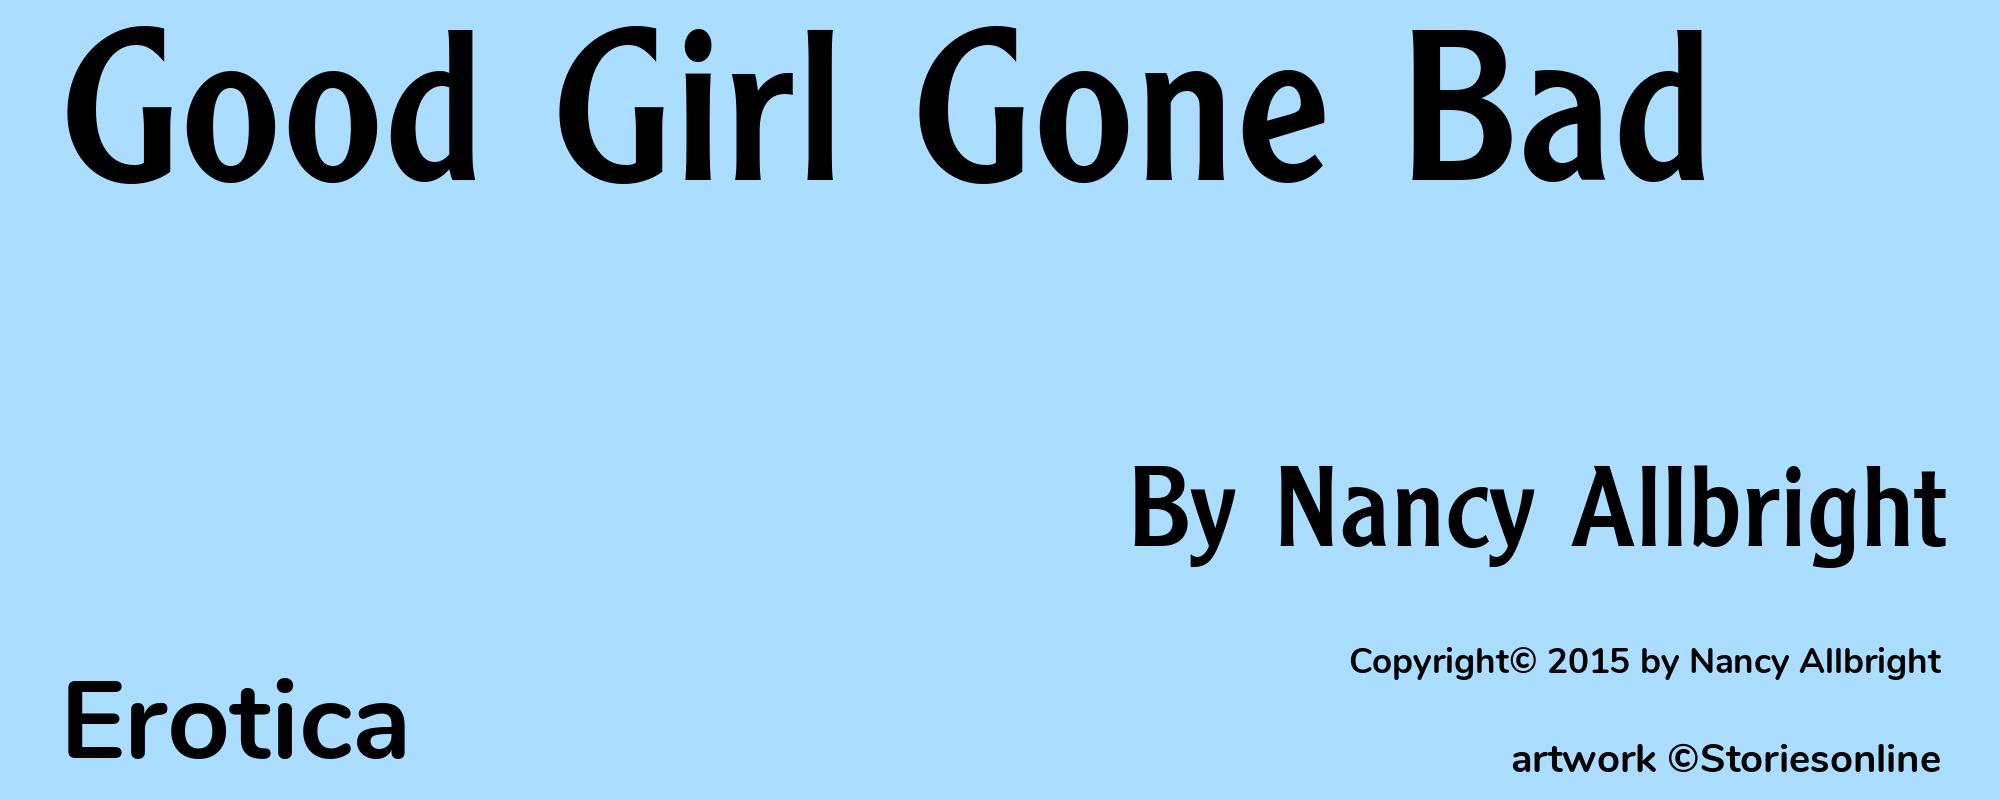 Good Girl Gone Bad - Cover